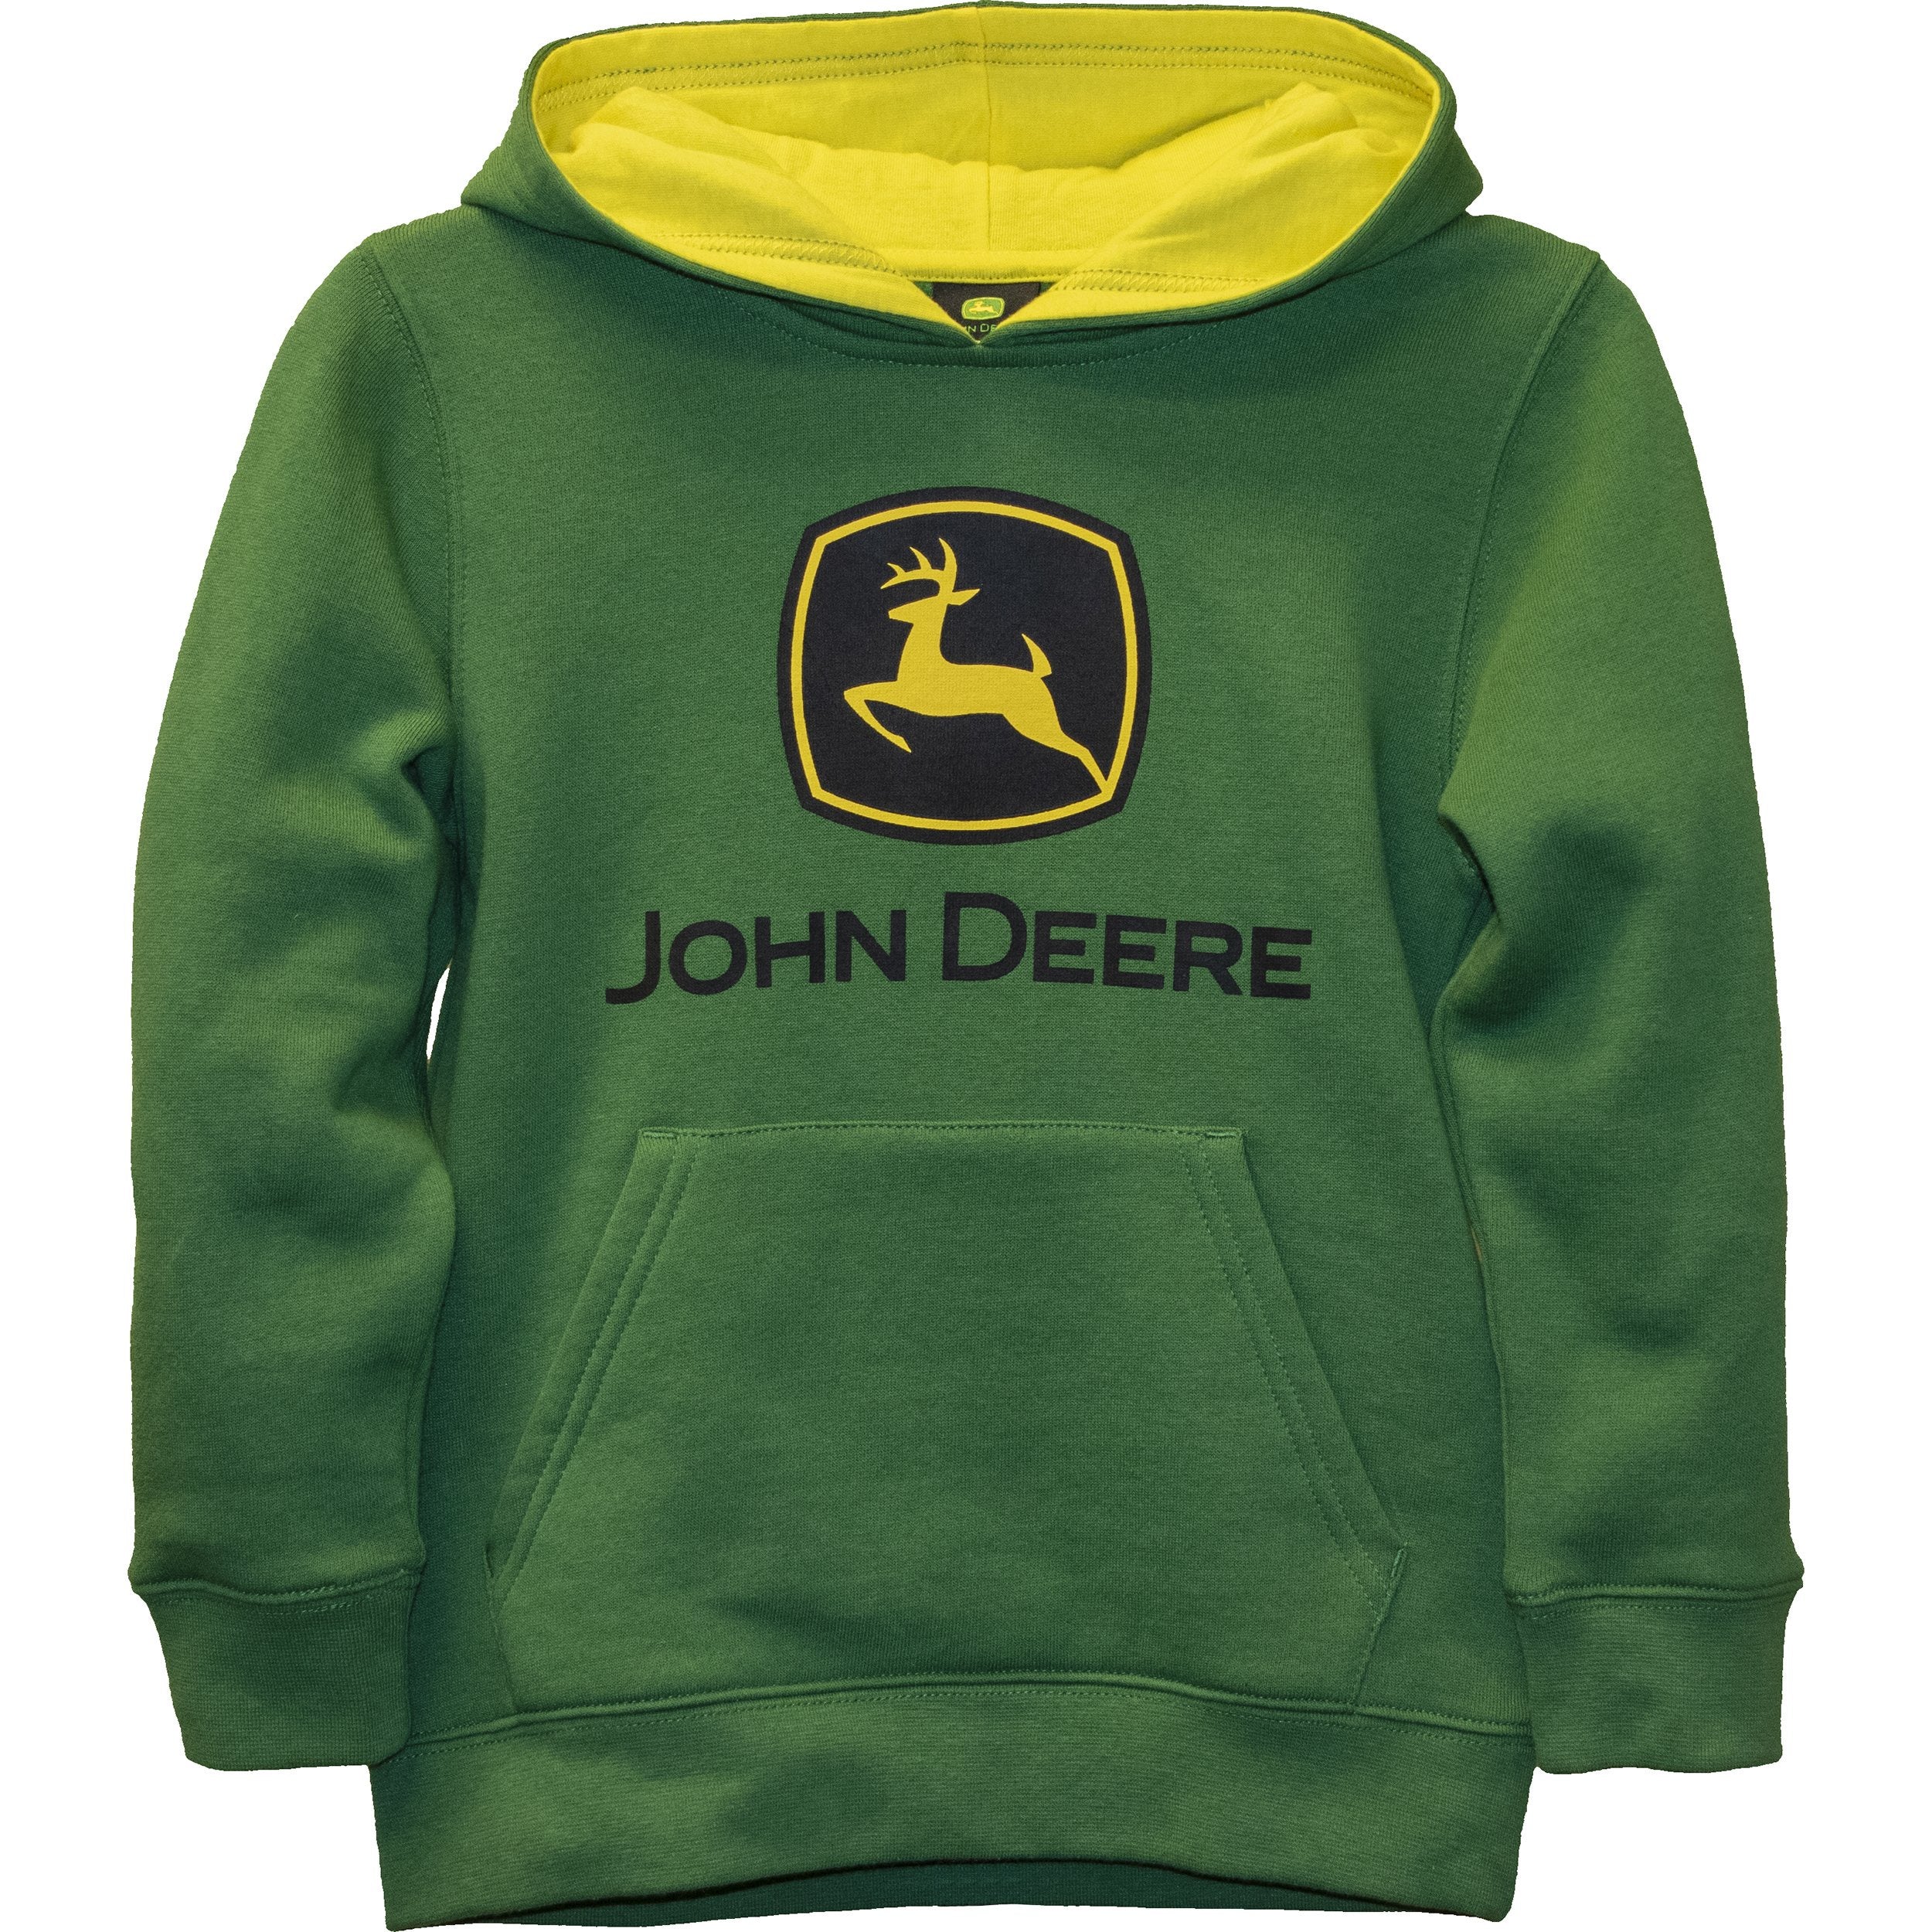 John Deere - Green Trademark fleece Youth